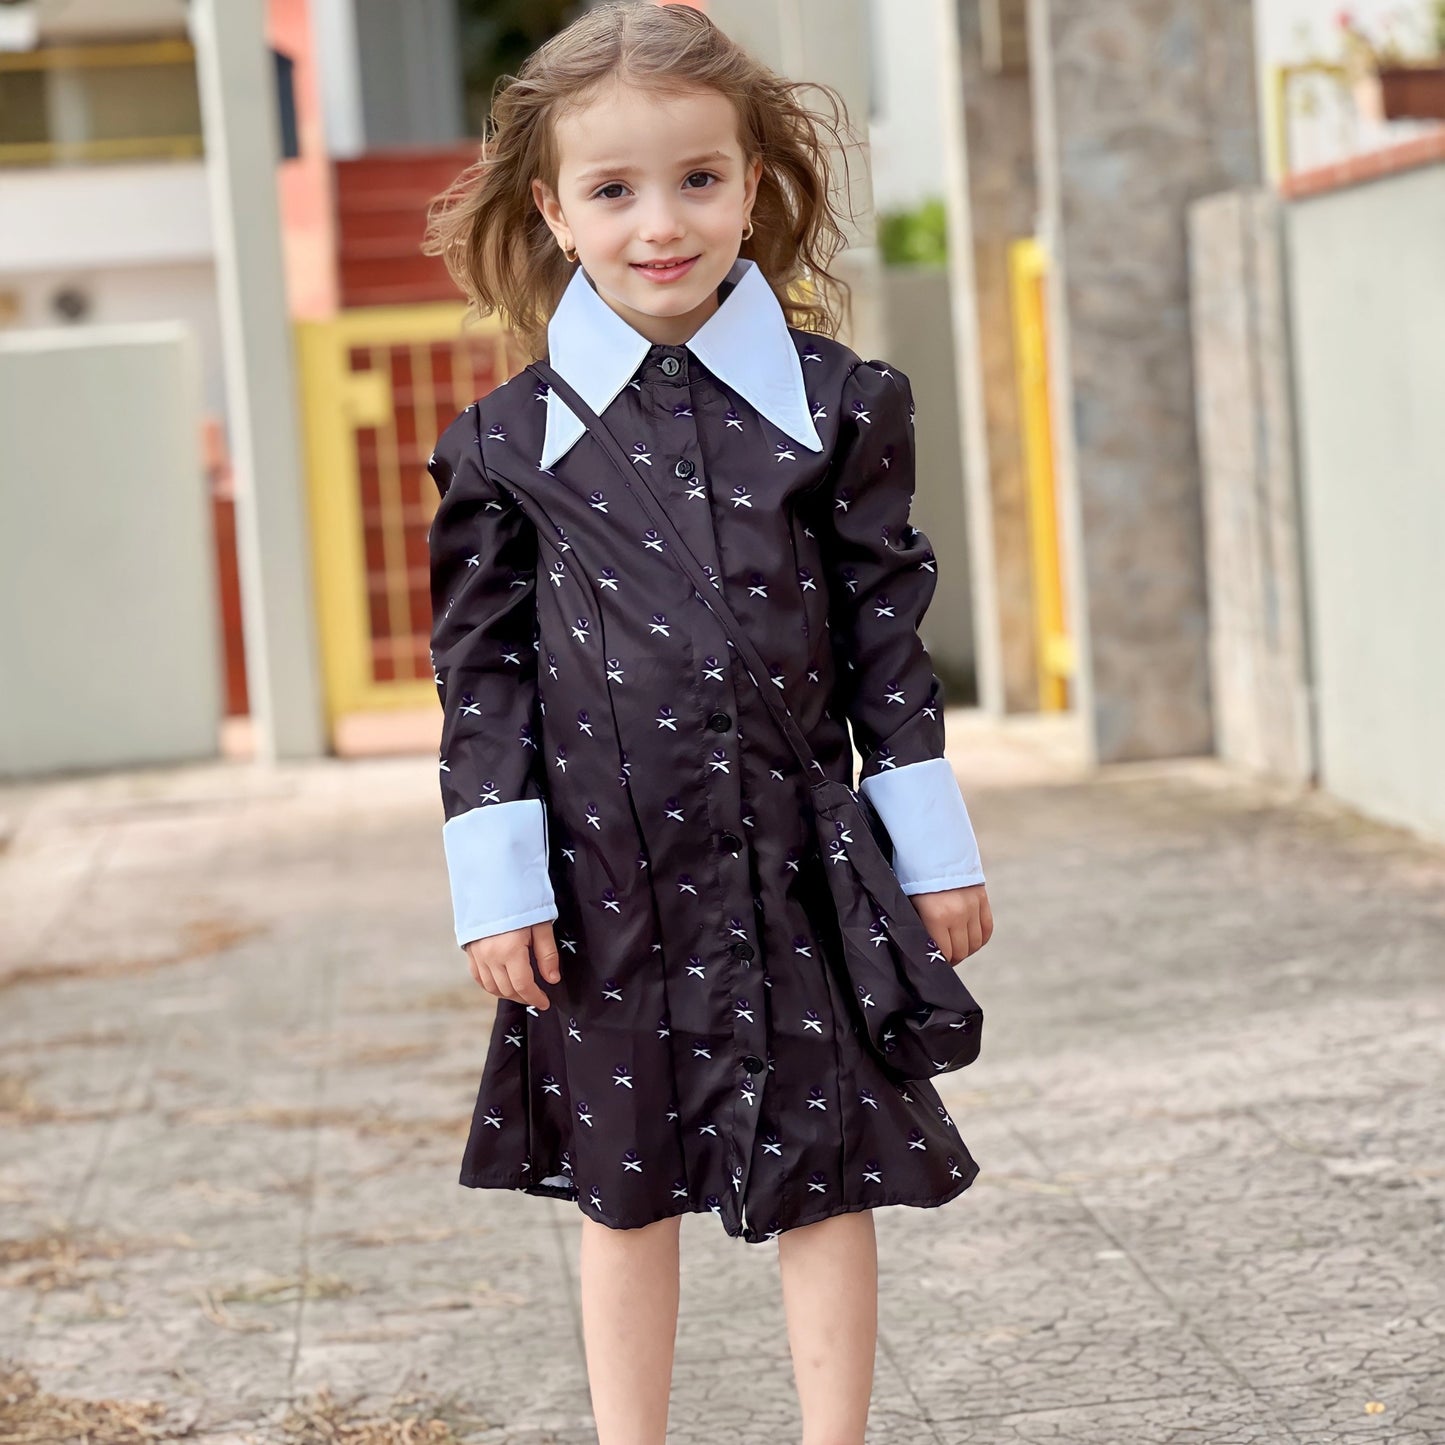 Wednesday Addams Costume Girls Dress for Kids Black